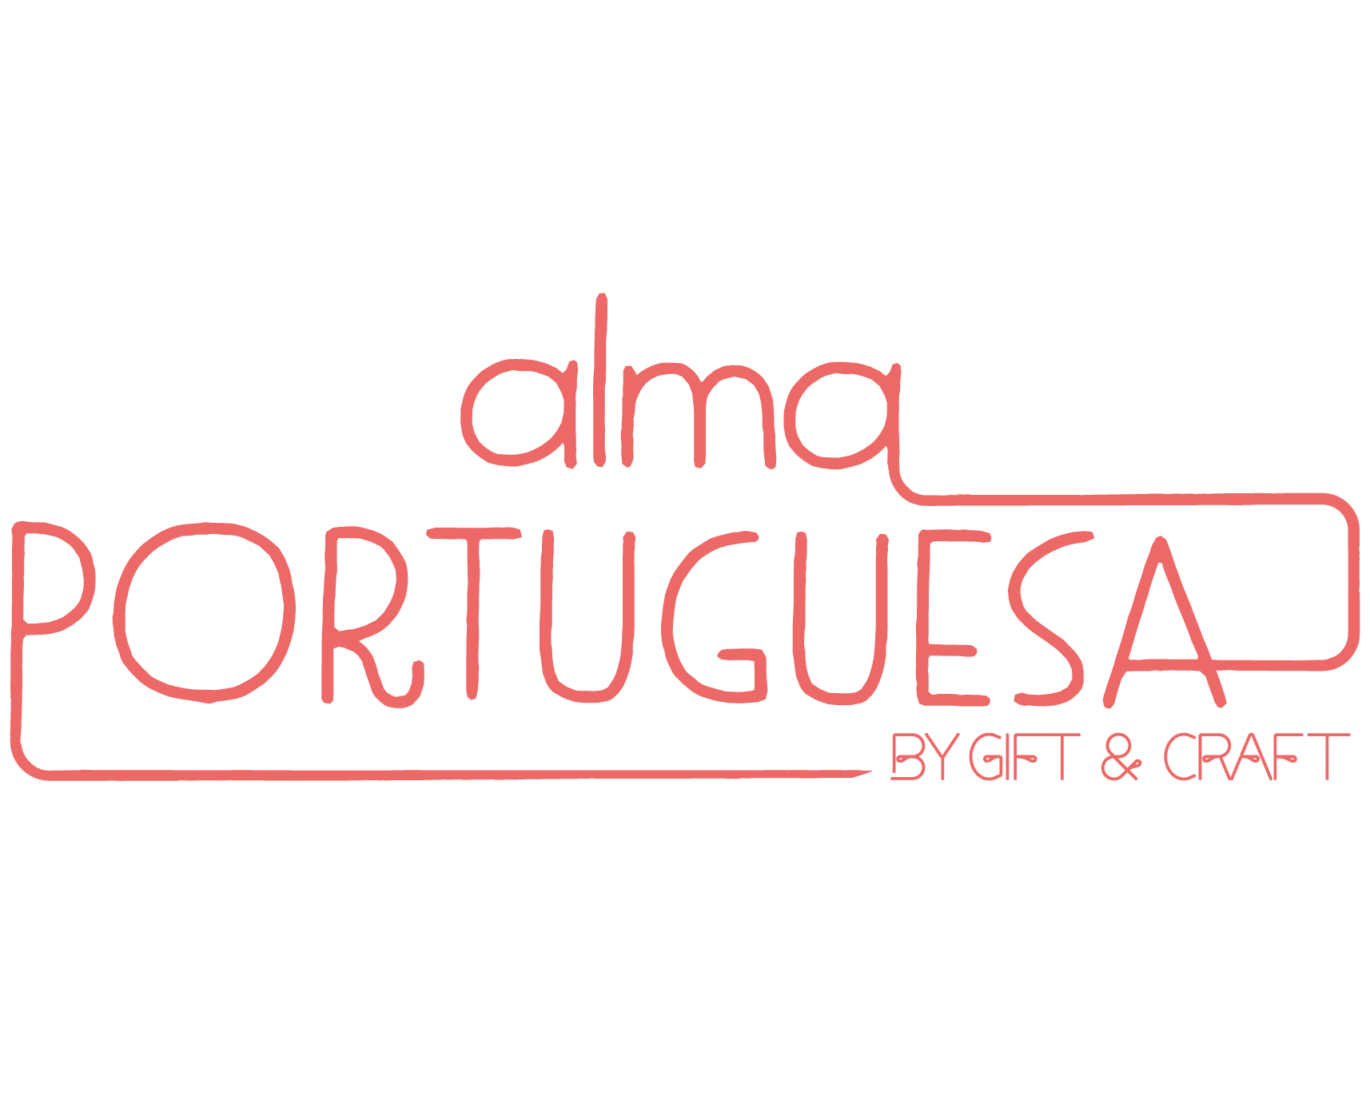 alma Portuguesa by Gift & Craft